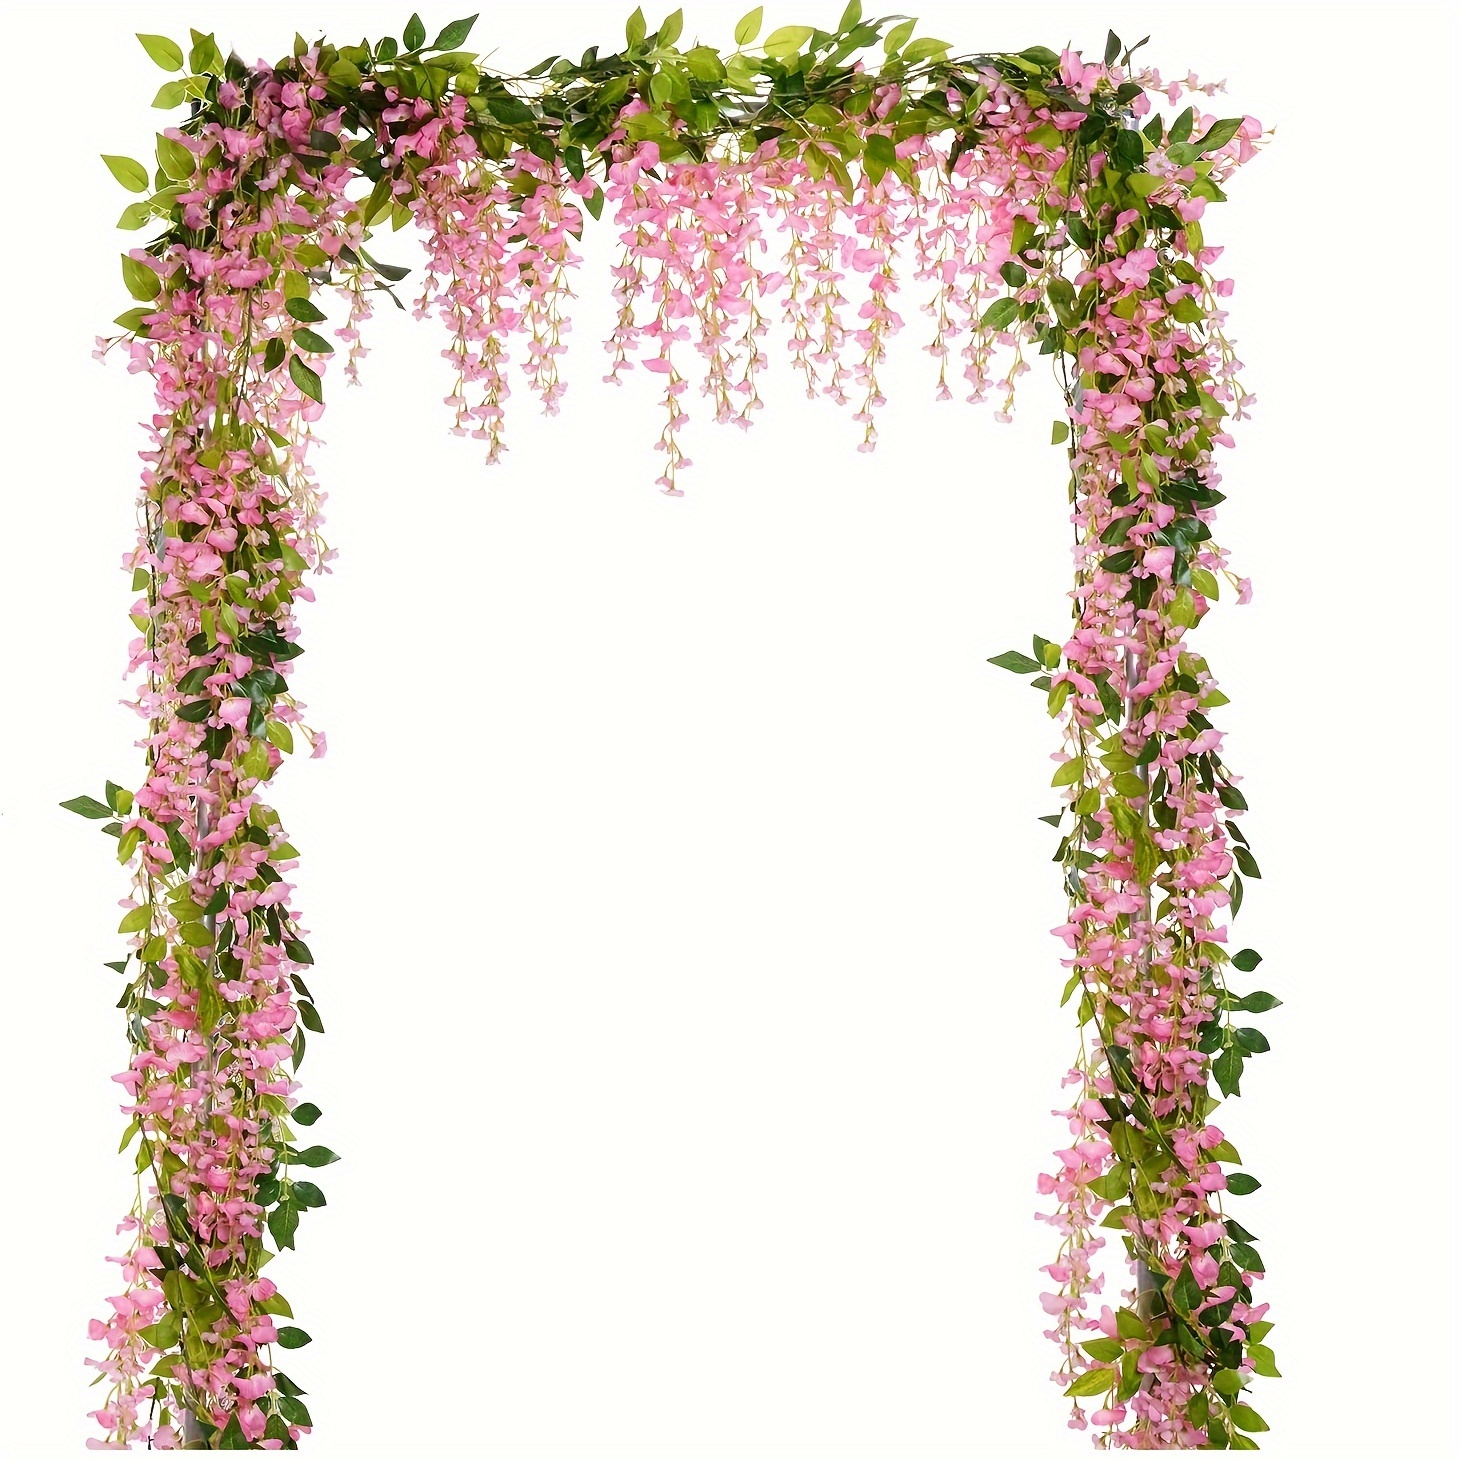 

4-piece Silk Wisteria Garland - Artificial Hanging Flowers For Home, Garden, Outdoor Ceremonies & Wedding Arch Decor Rustic Wedding Decorations Hanging Artificial Flowers